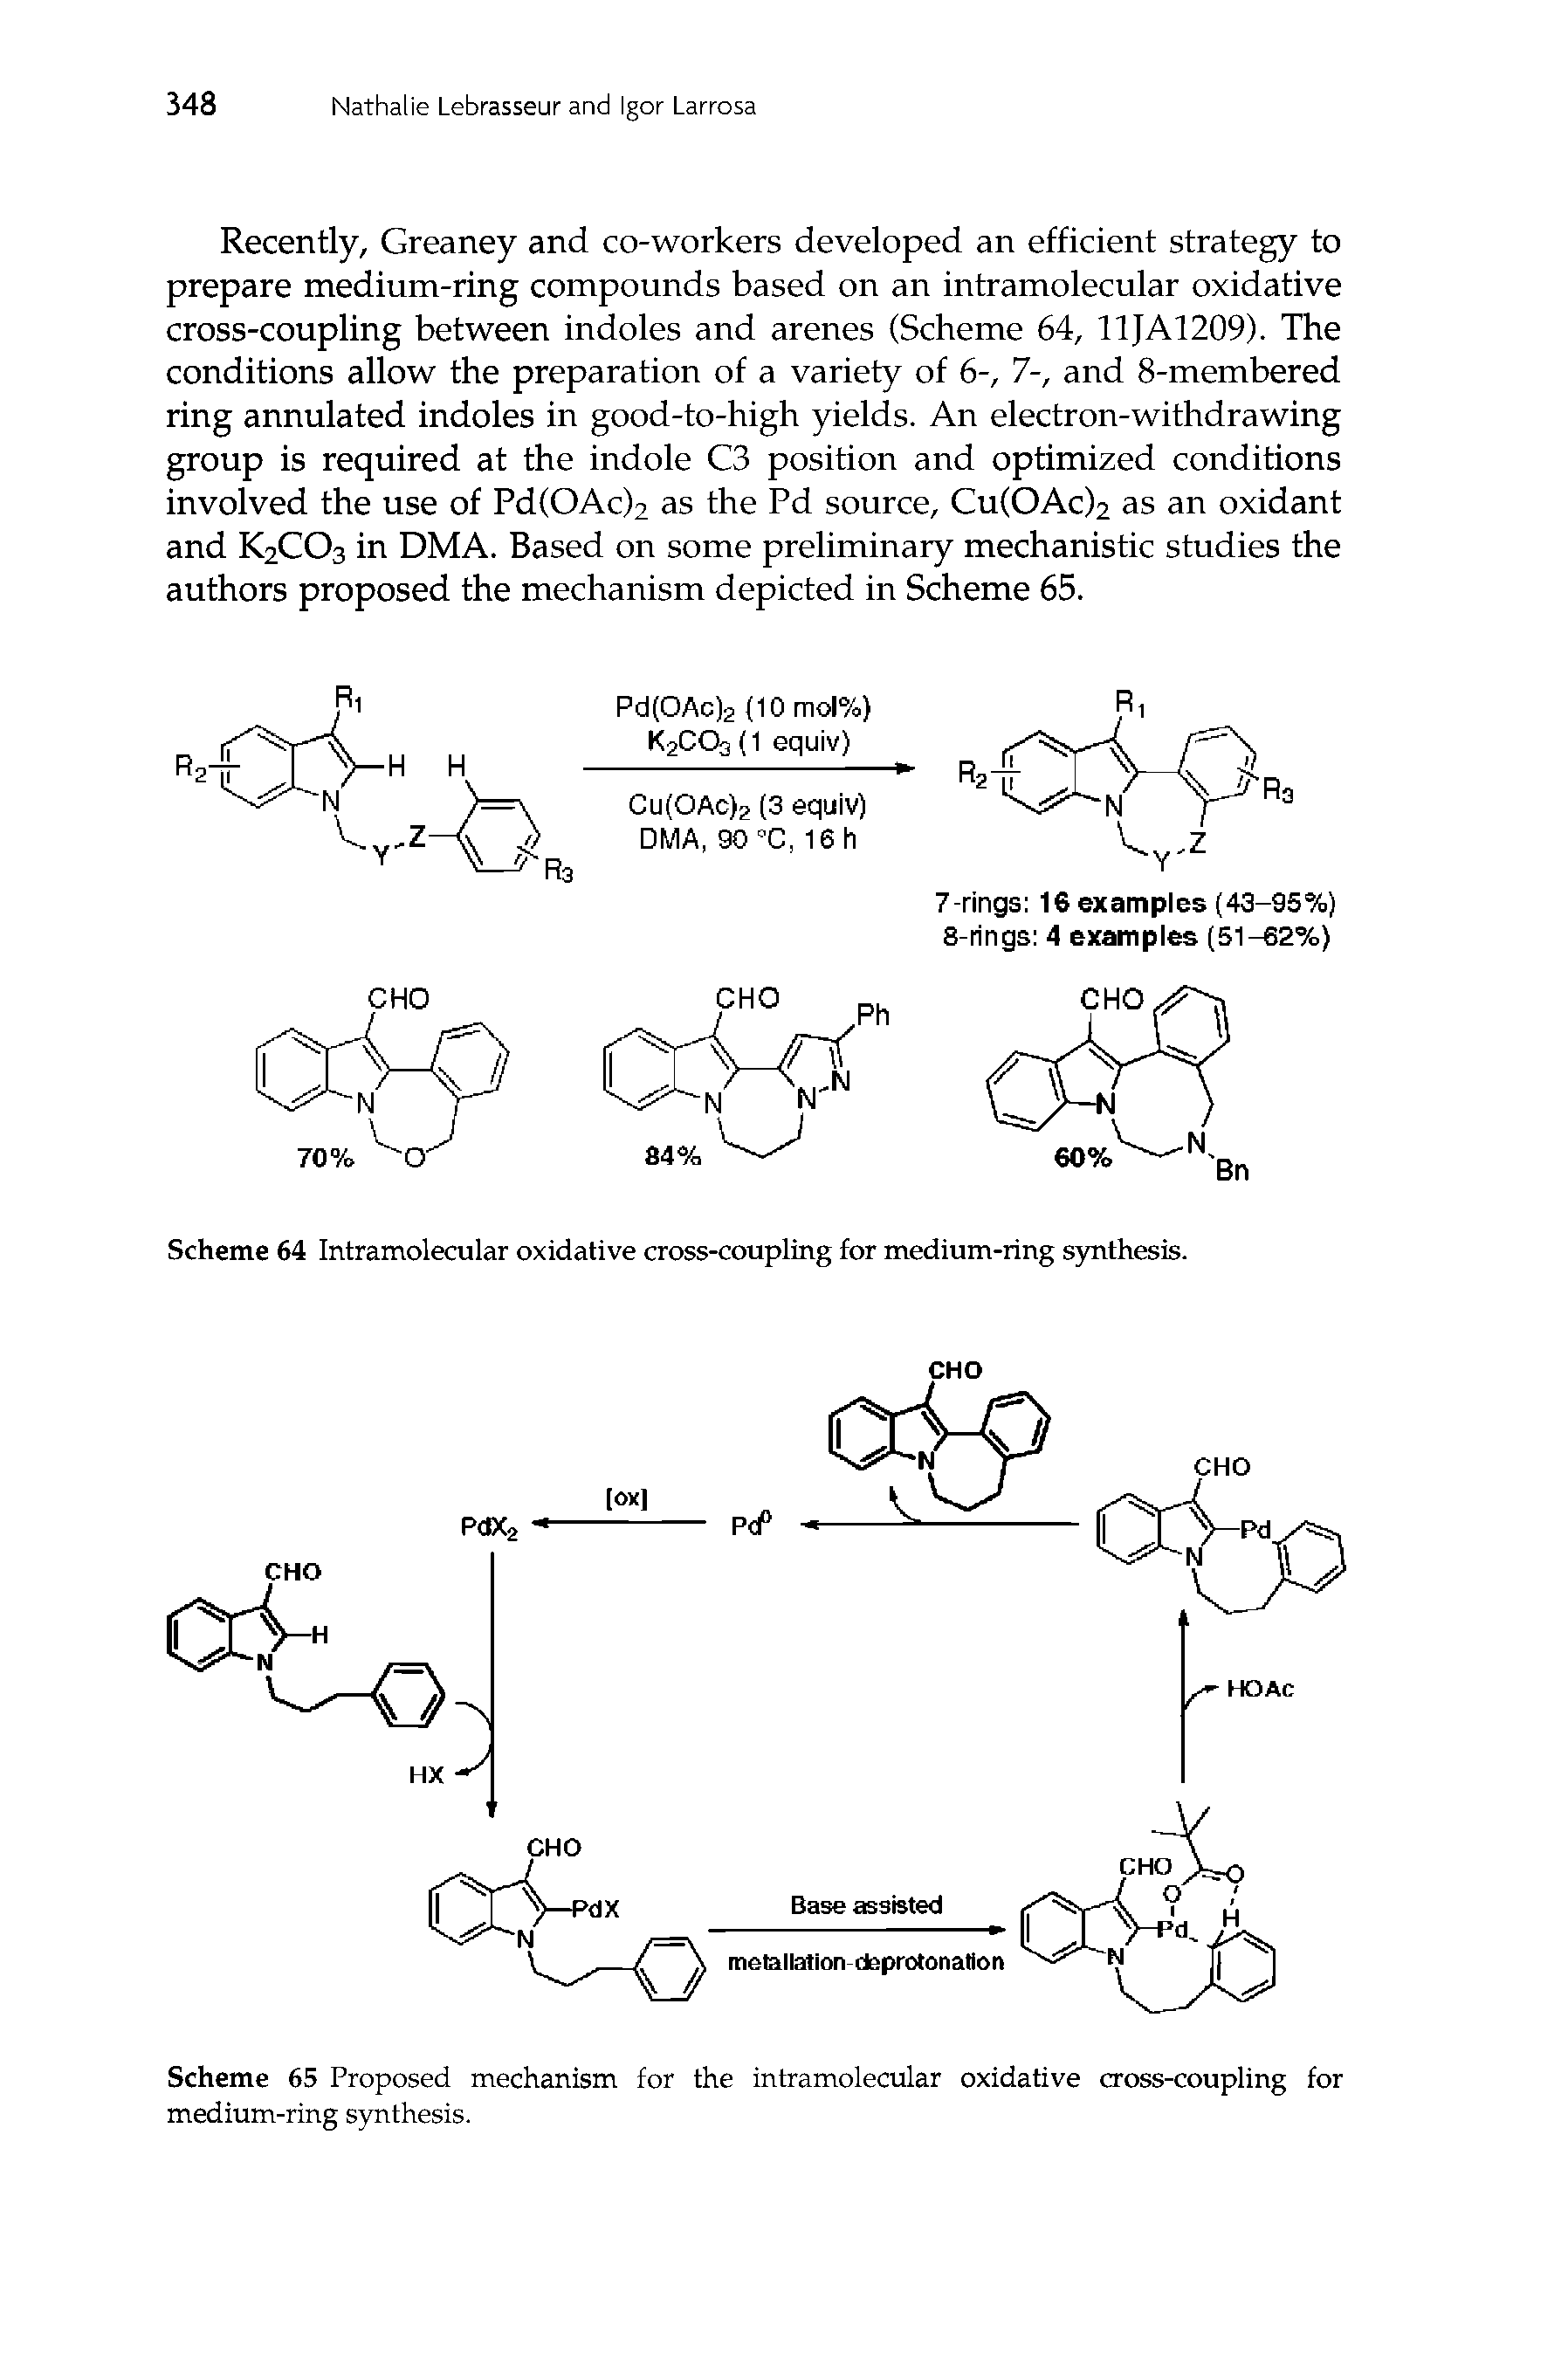 Scheme 64 Intramolecular oxidative cross-coupling for medium-ring synthesis.